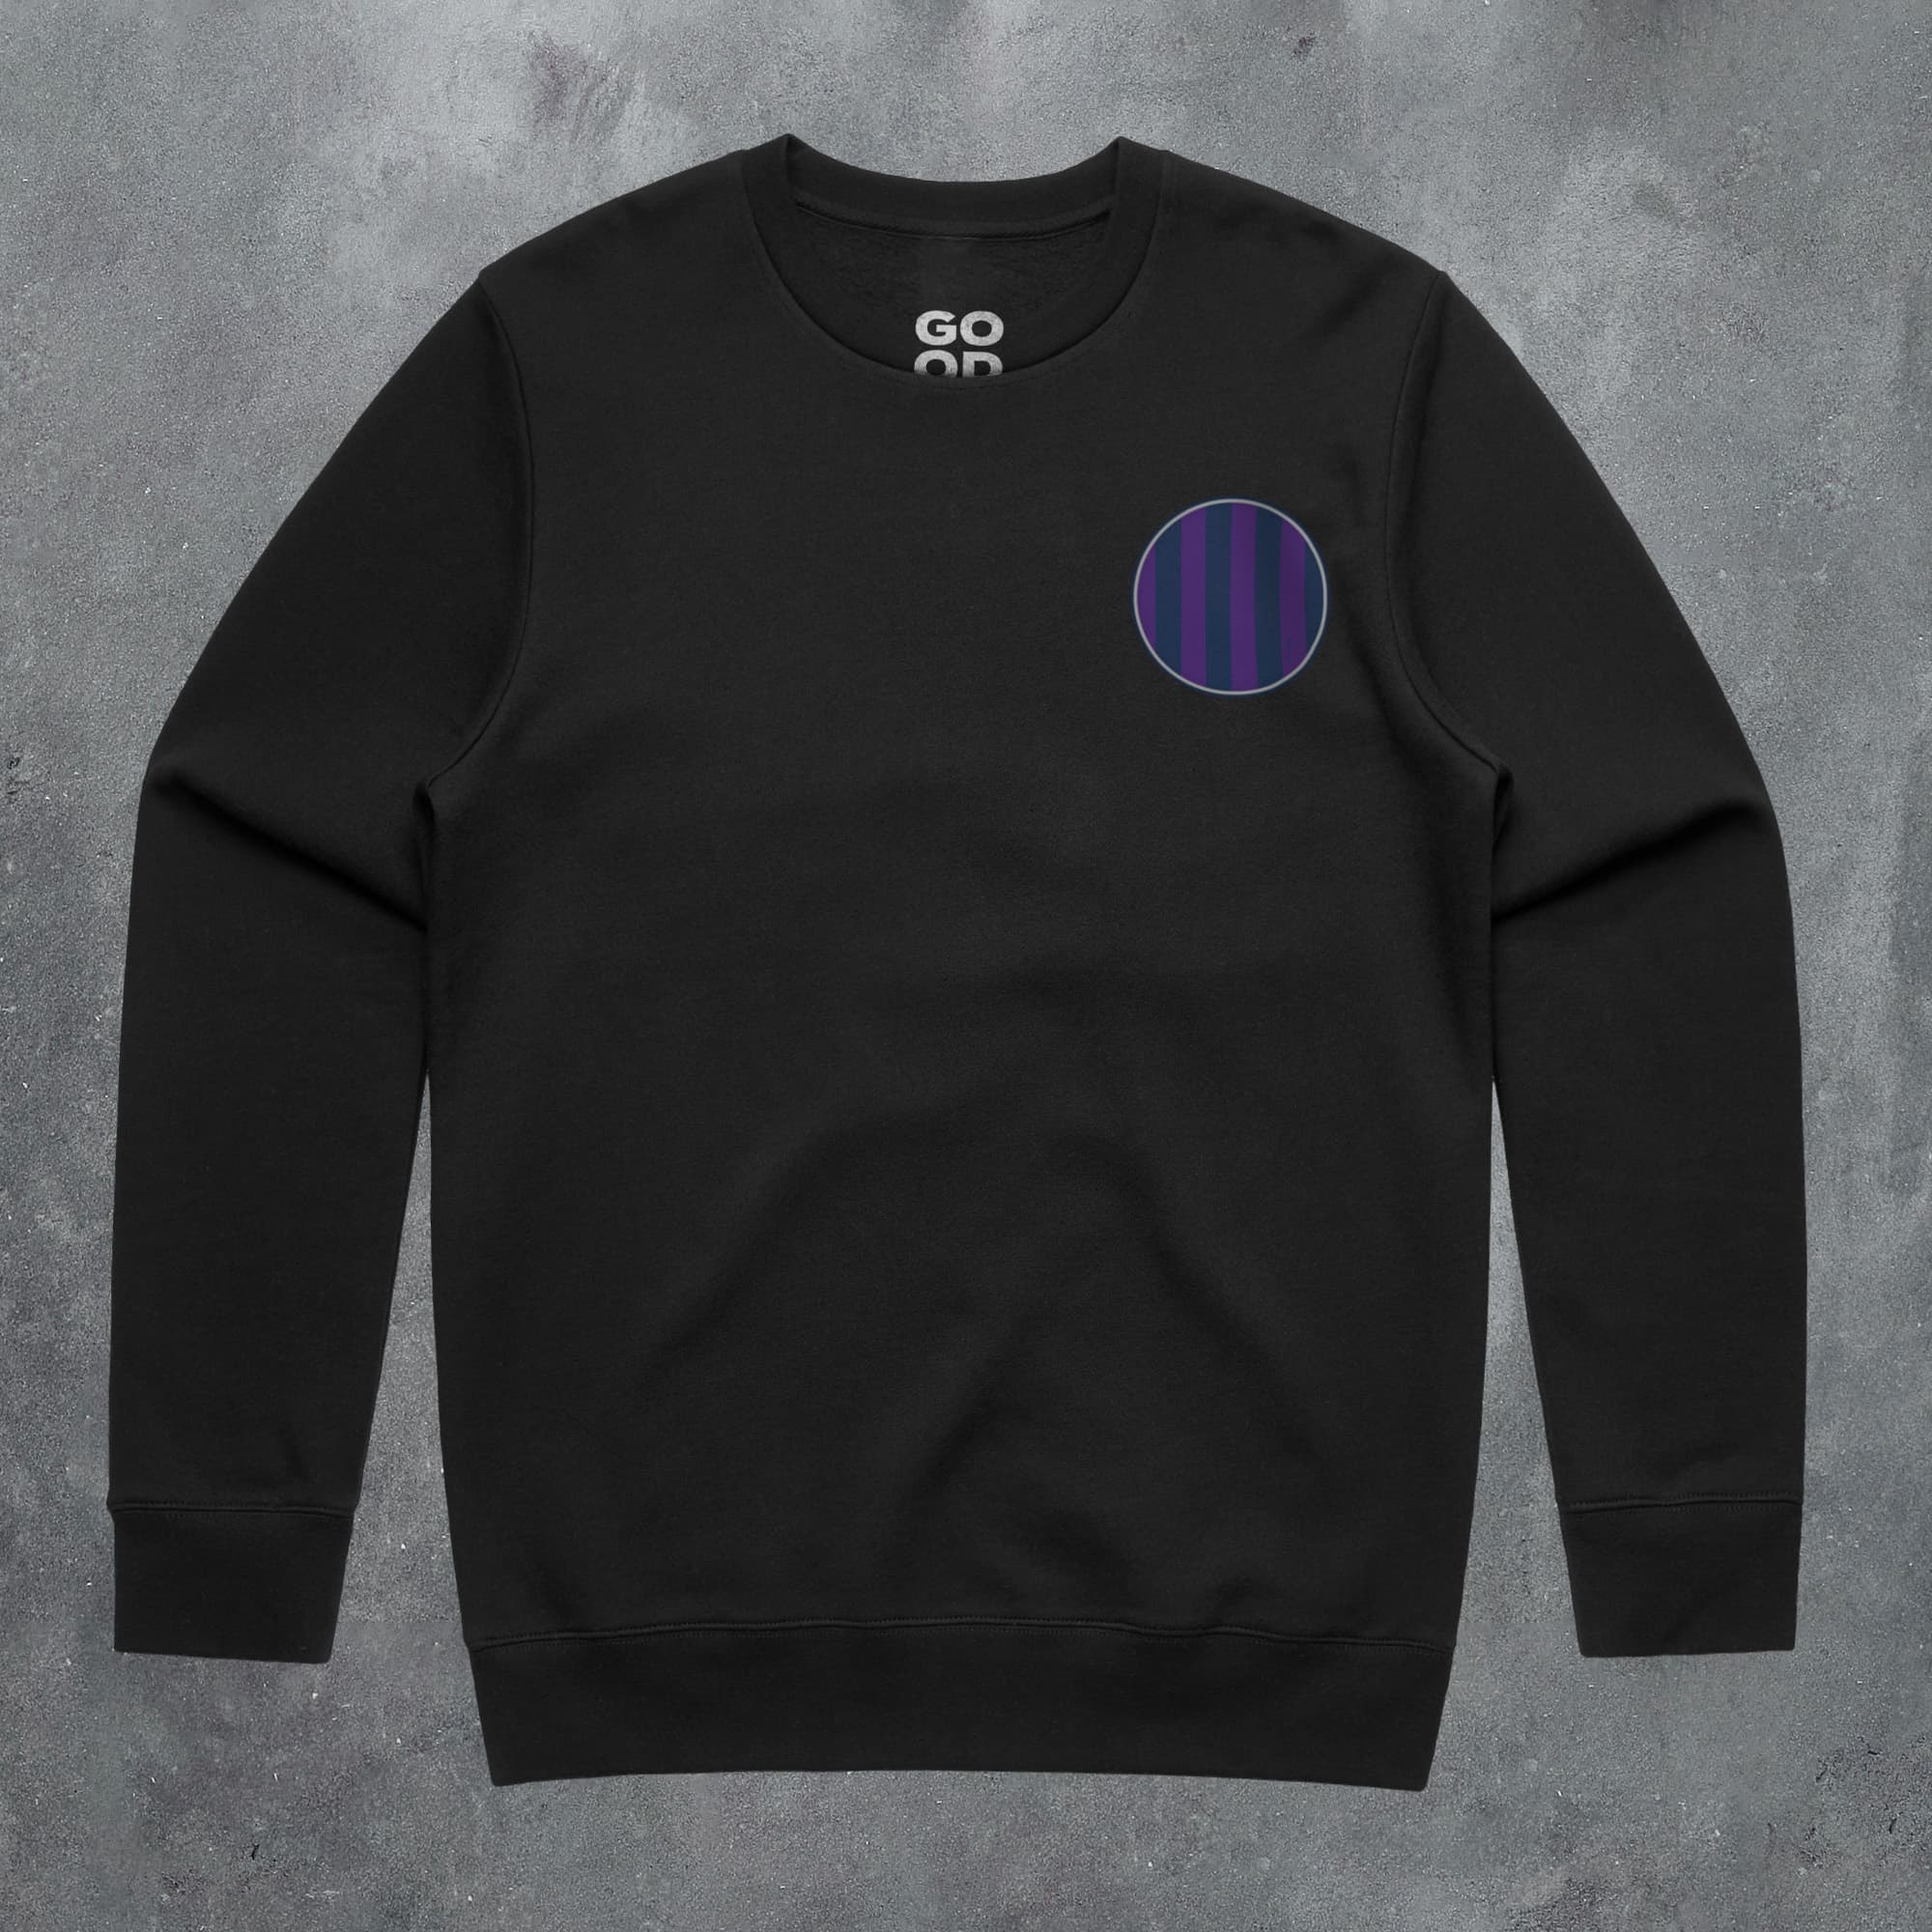 a black sweatshirt with a purple circle on it